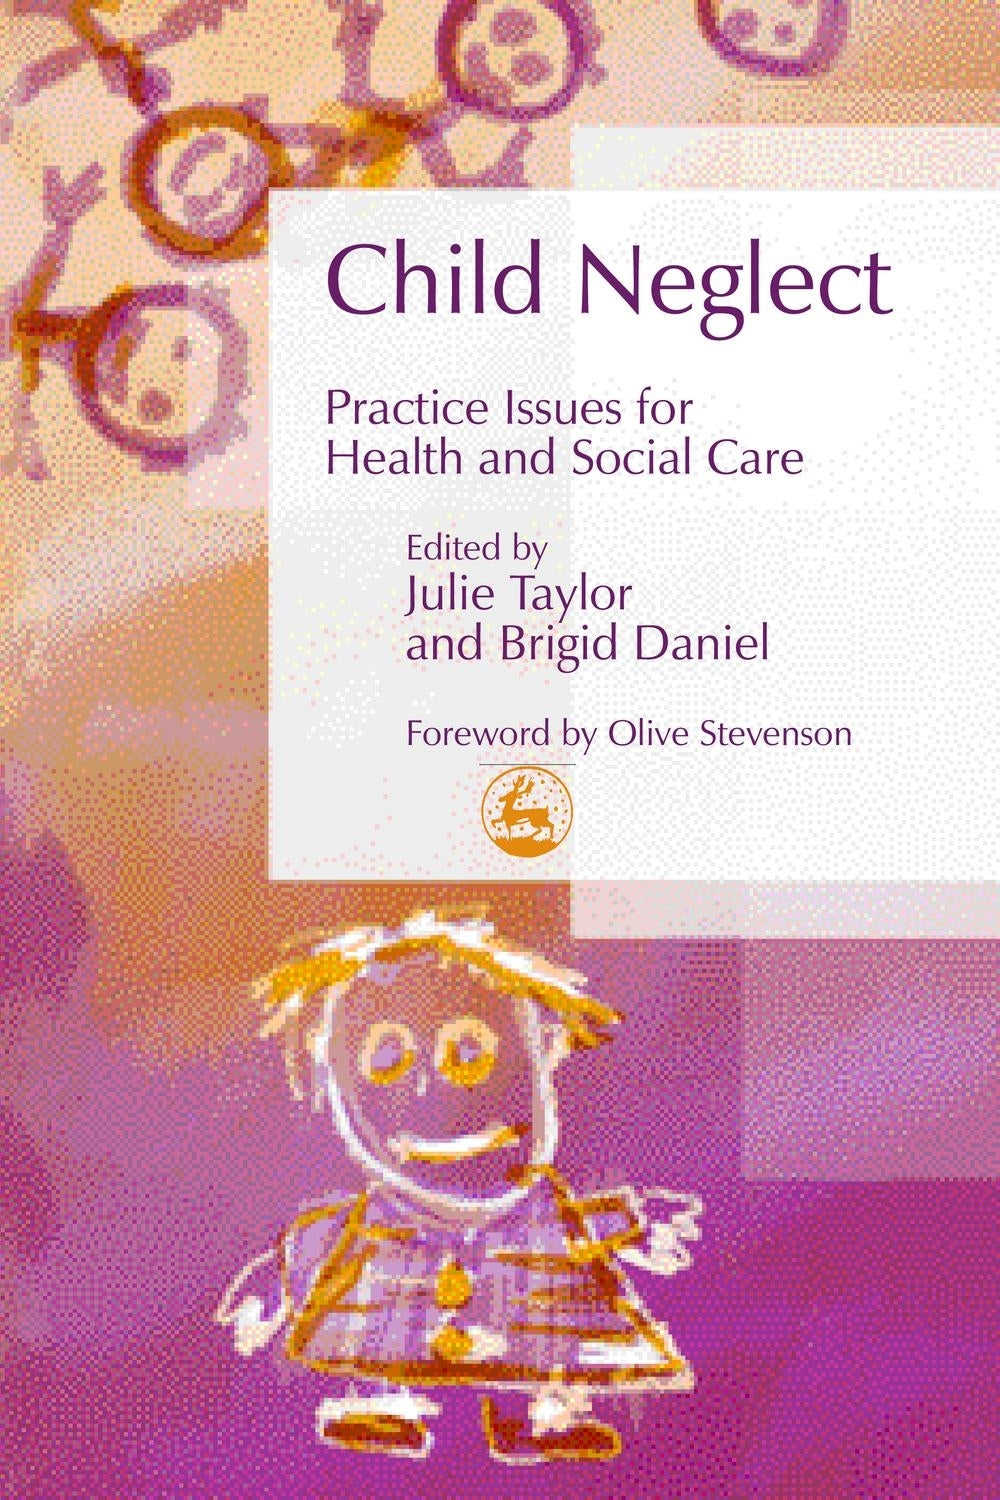 Child Neglect by Brigid Daniel, Julie Taylor